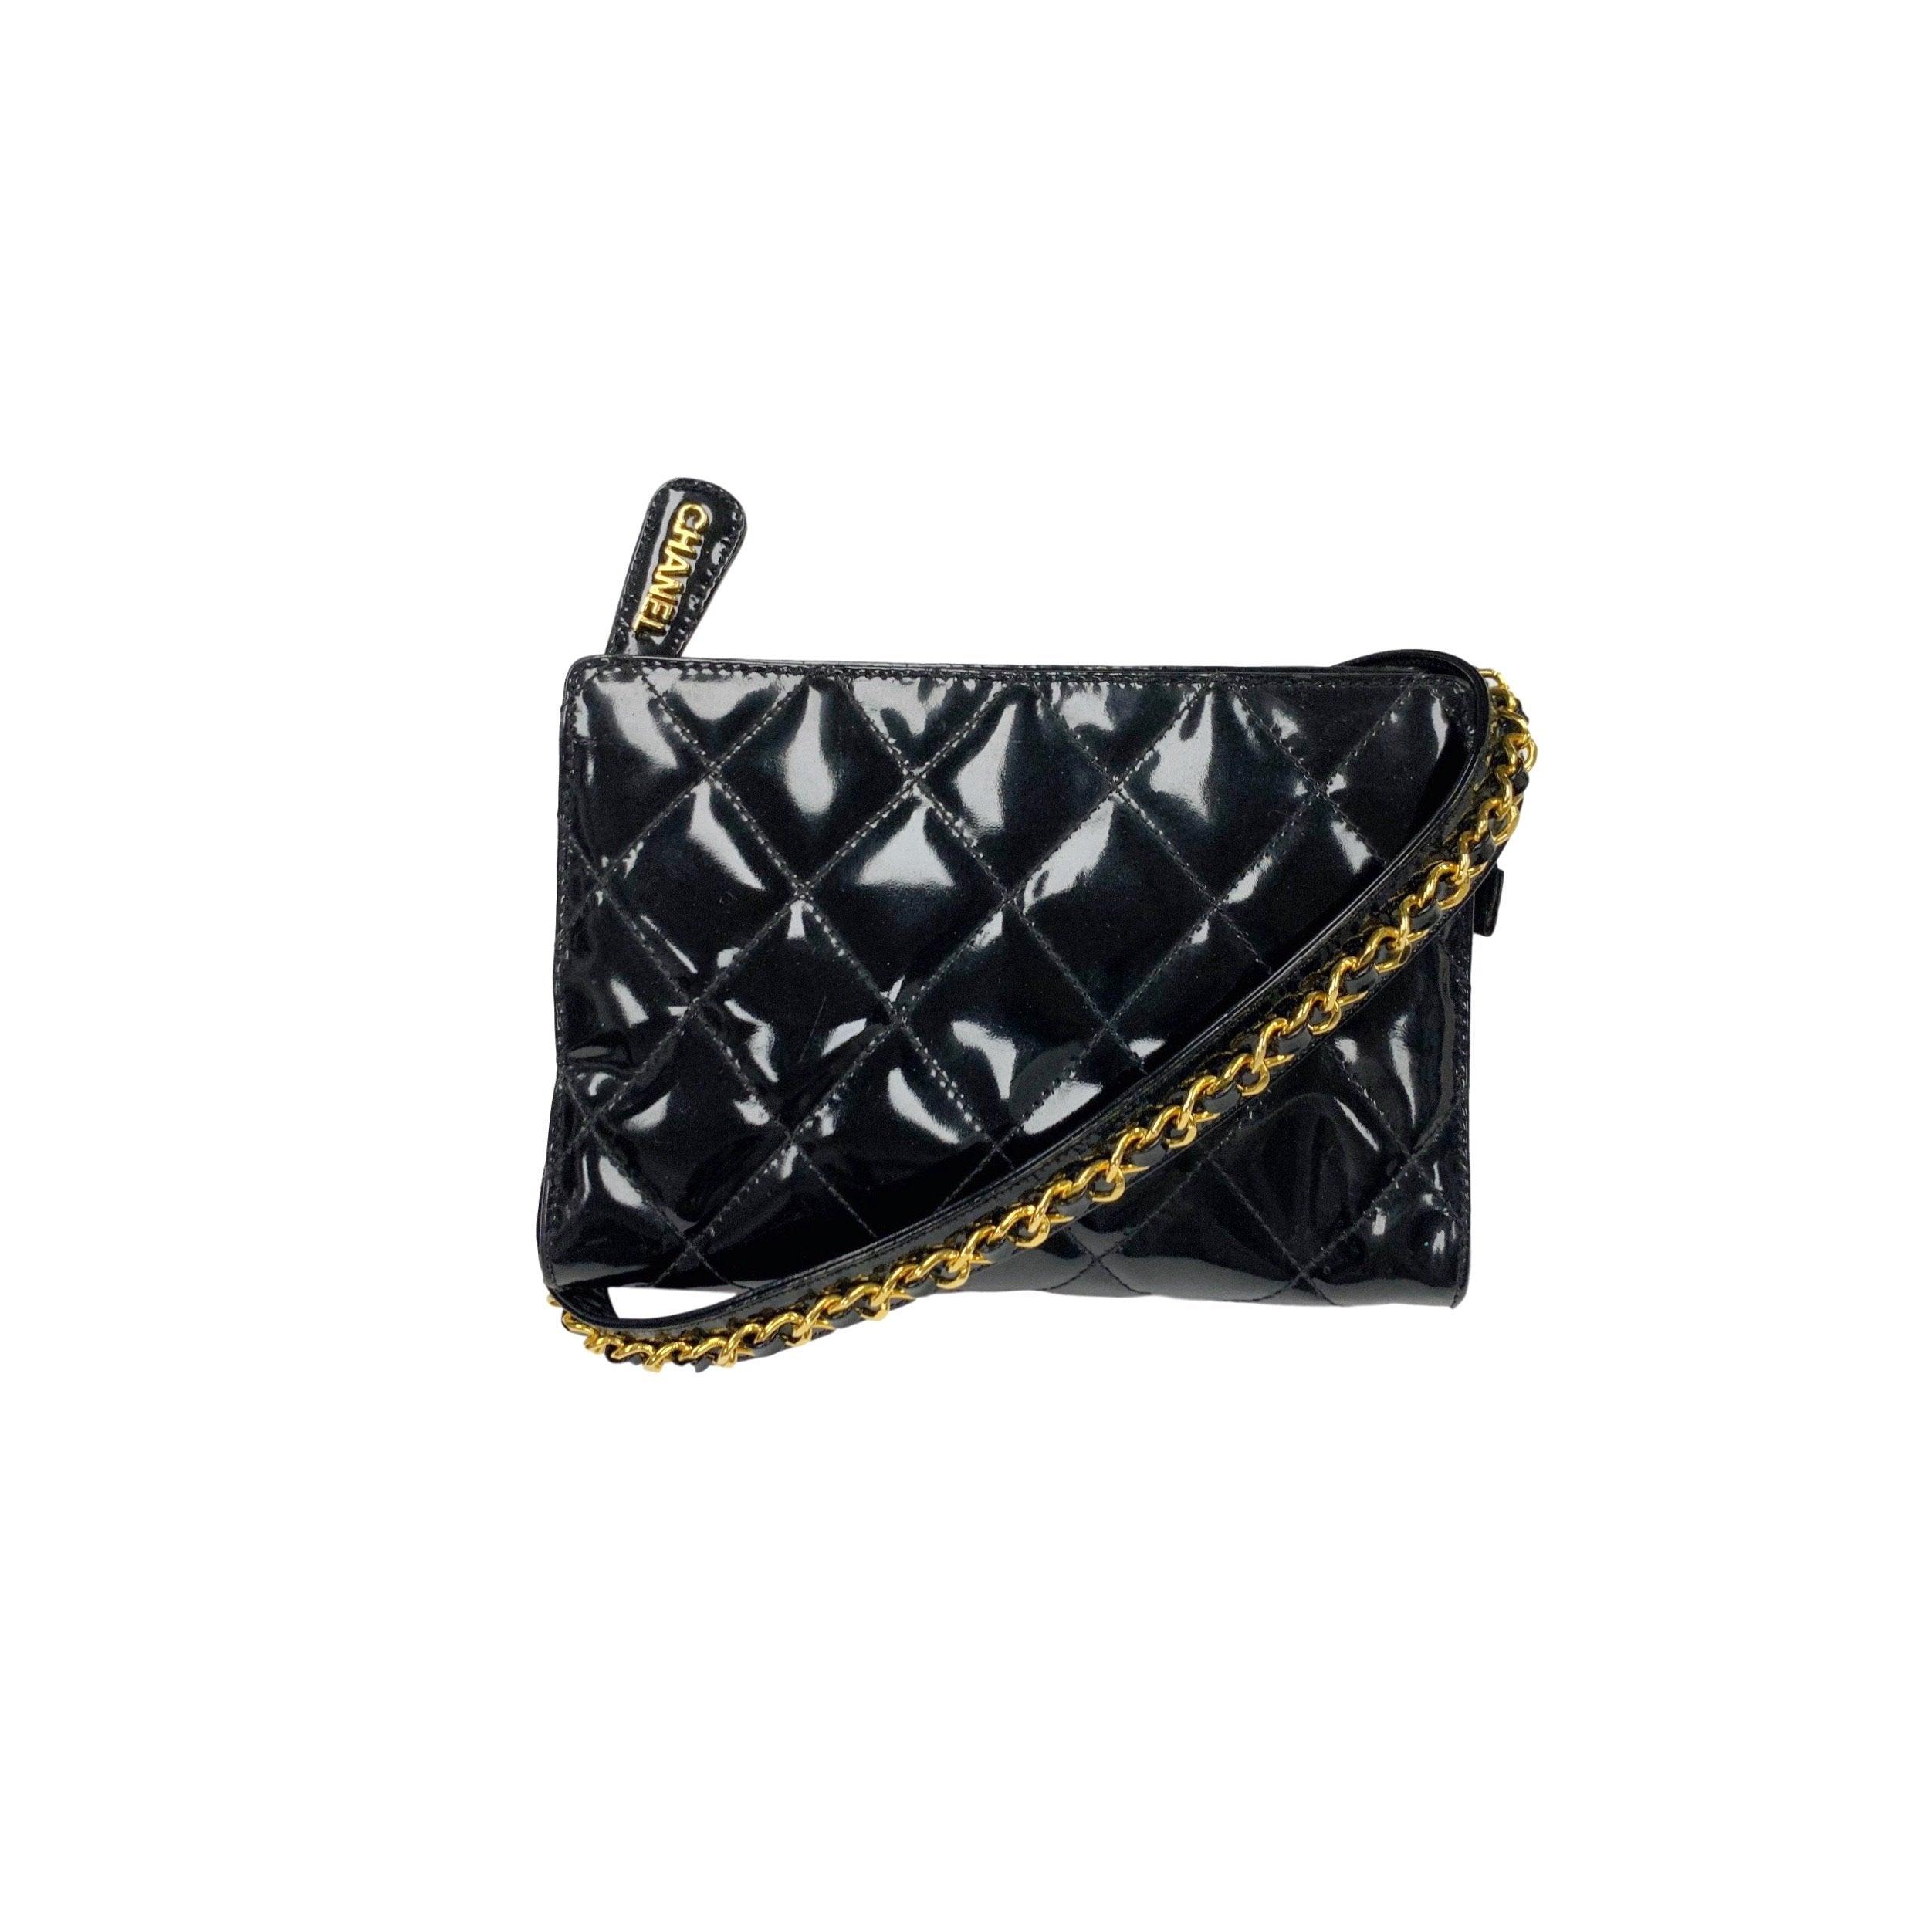 patent leather chanel handbag black